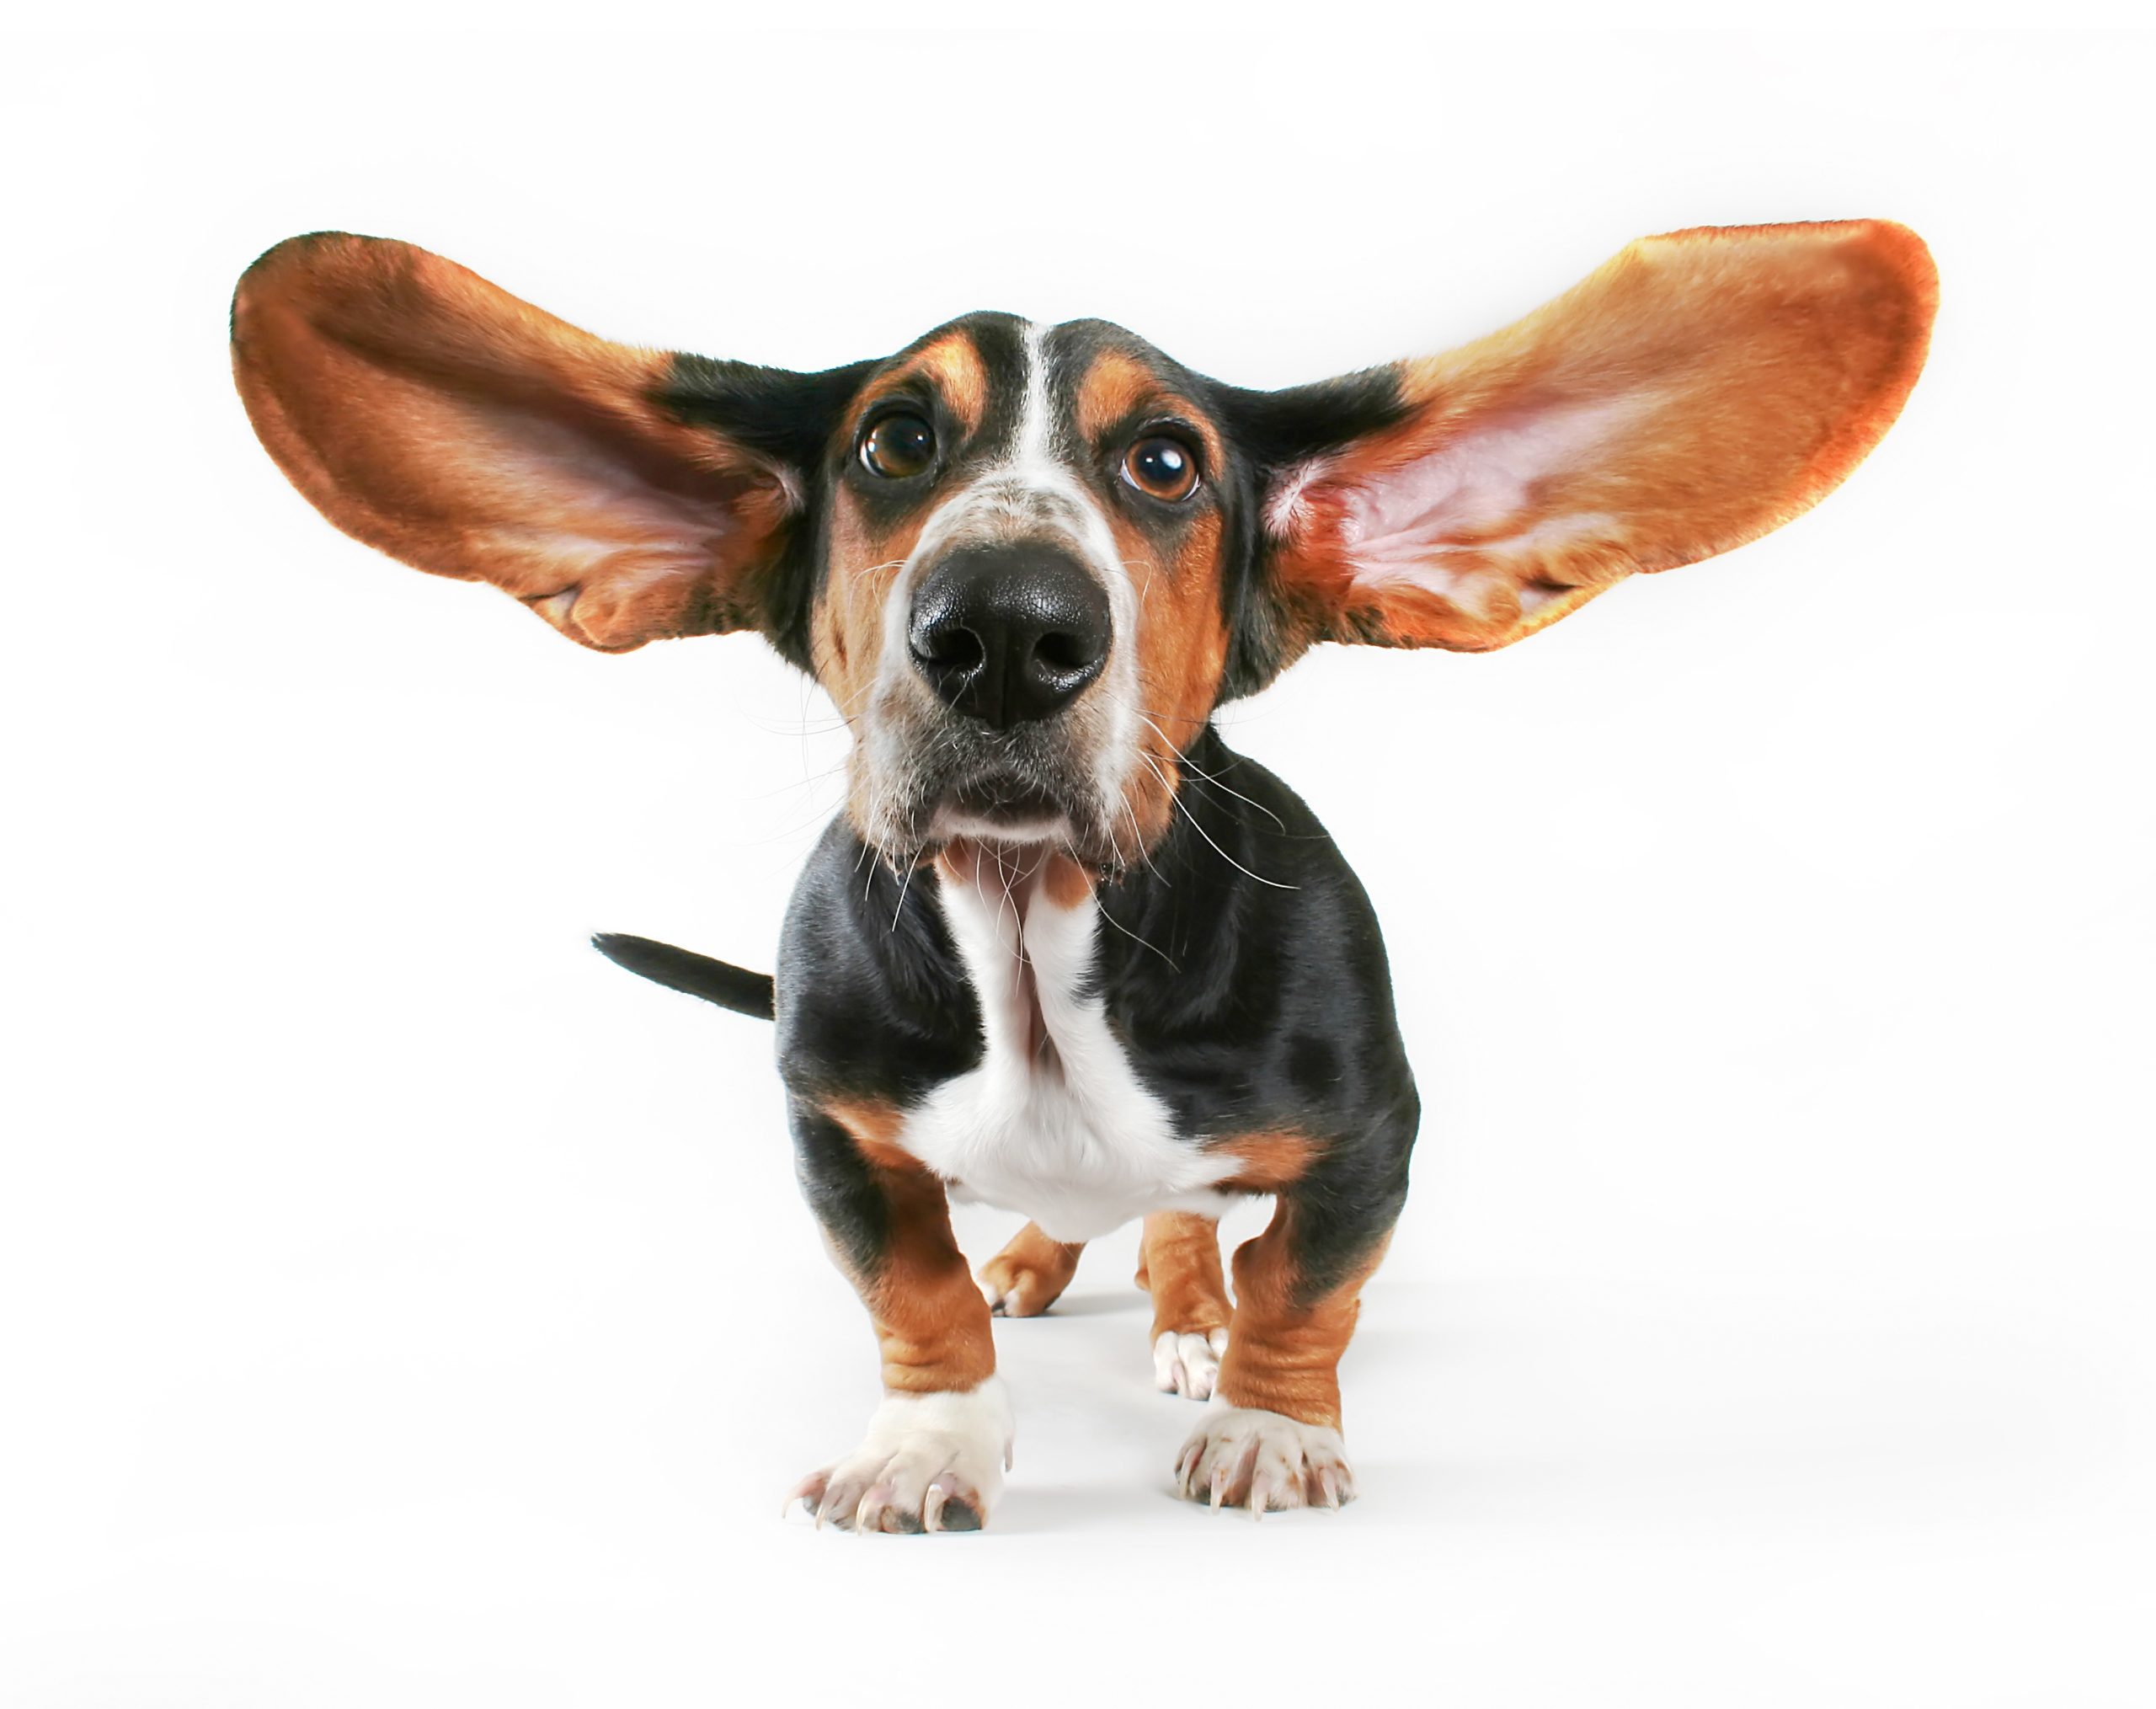 Surprised basset hound, used to illustrate article on B2B marketing ROI.